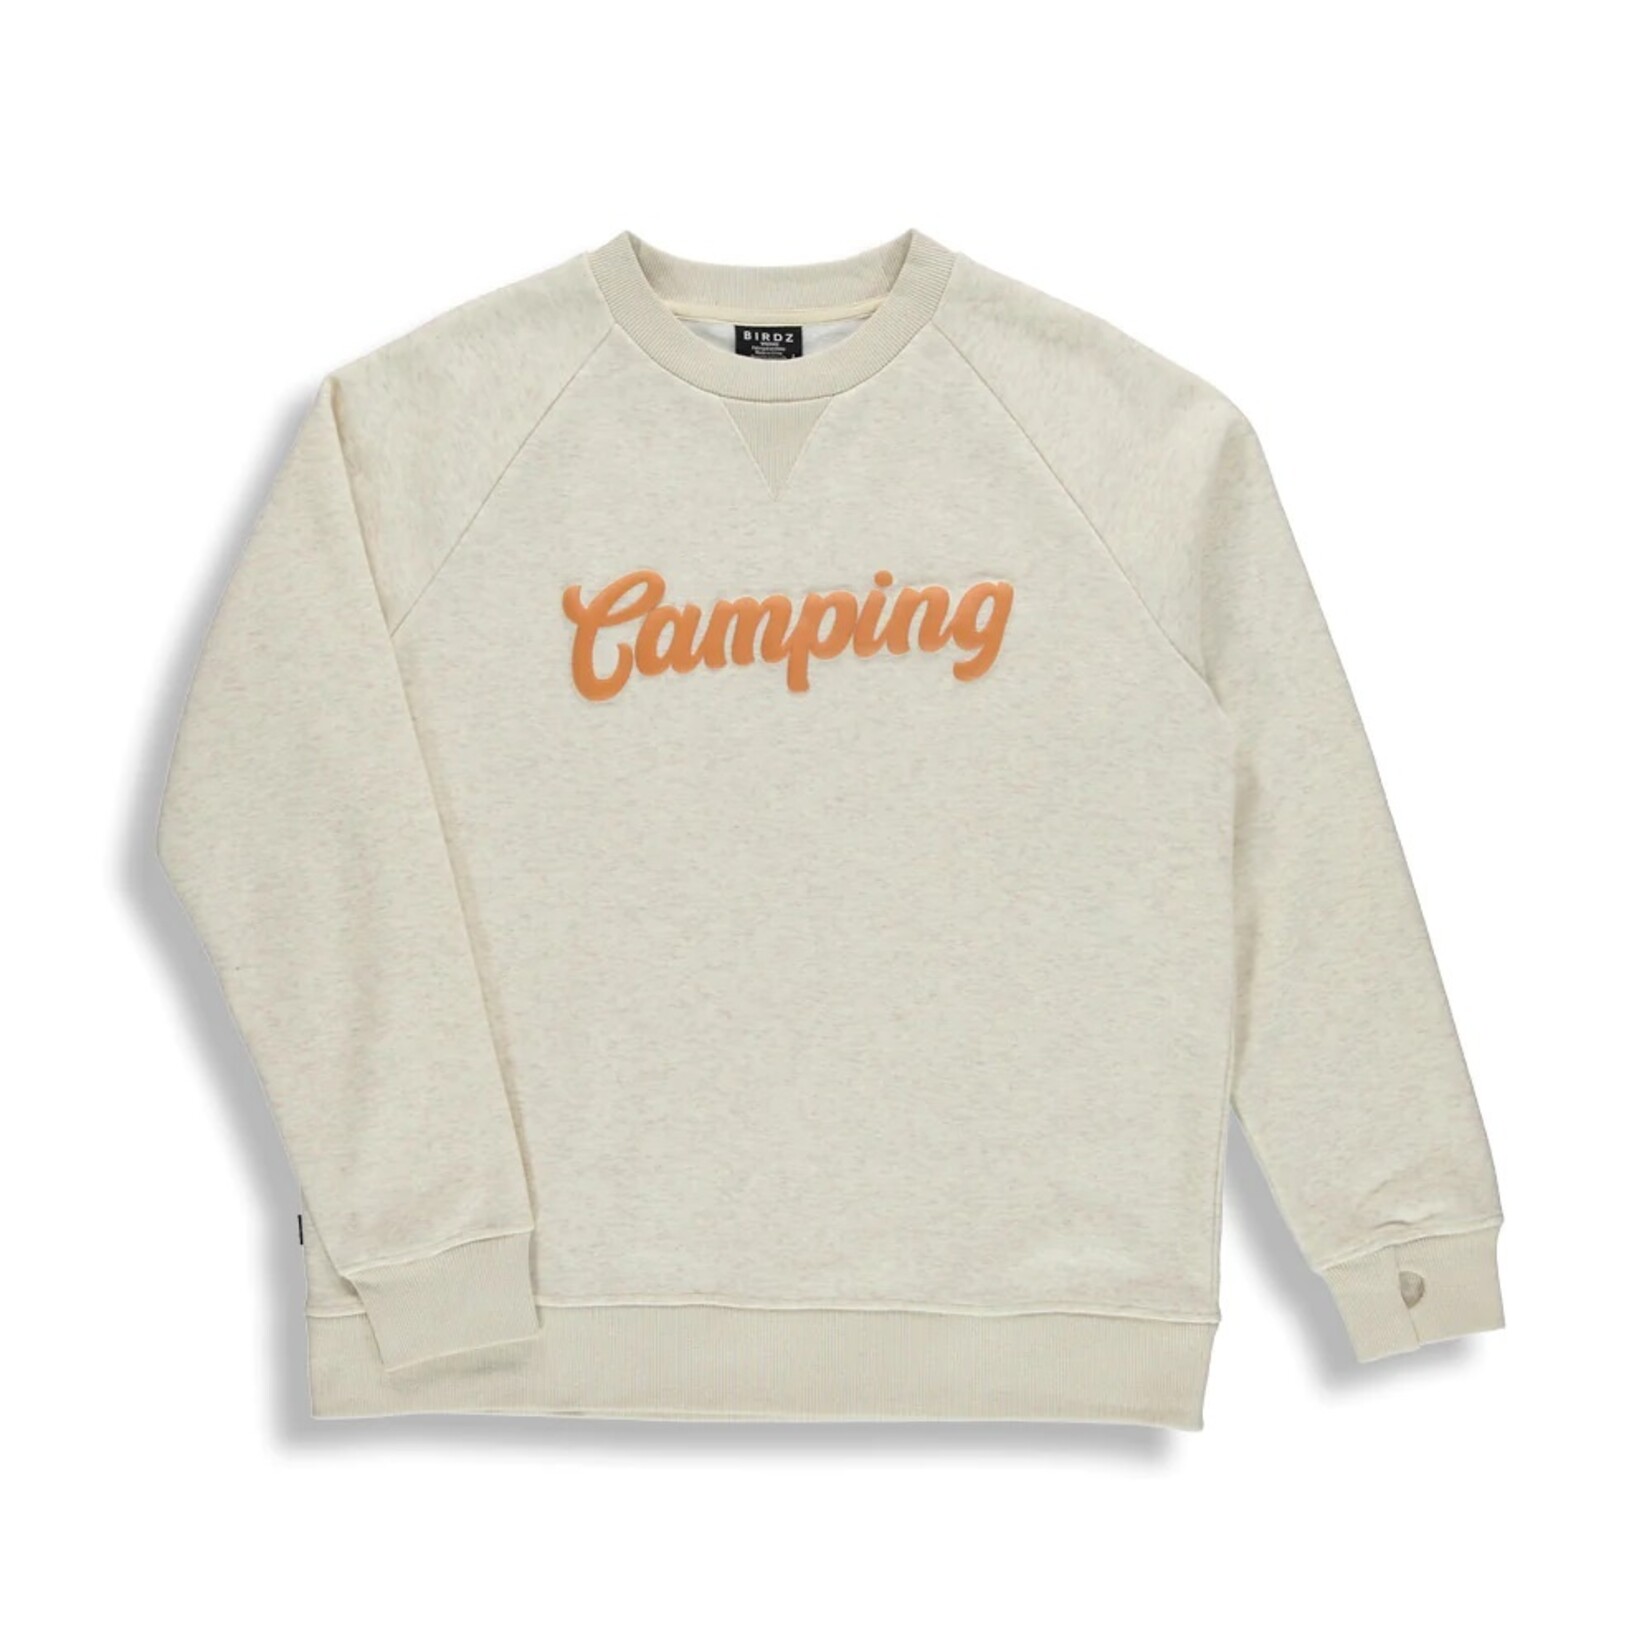 Birdz BIRDZ - 'Camping' Beige Sweatshirt With Orange Lettering